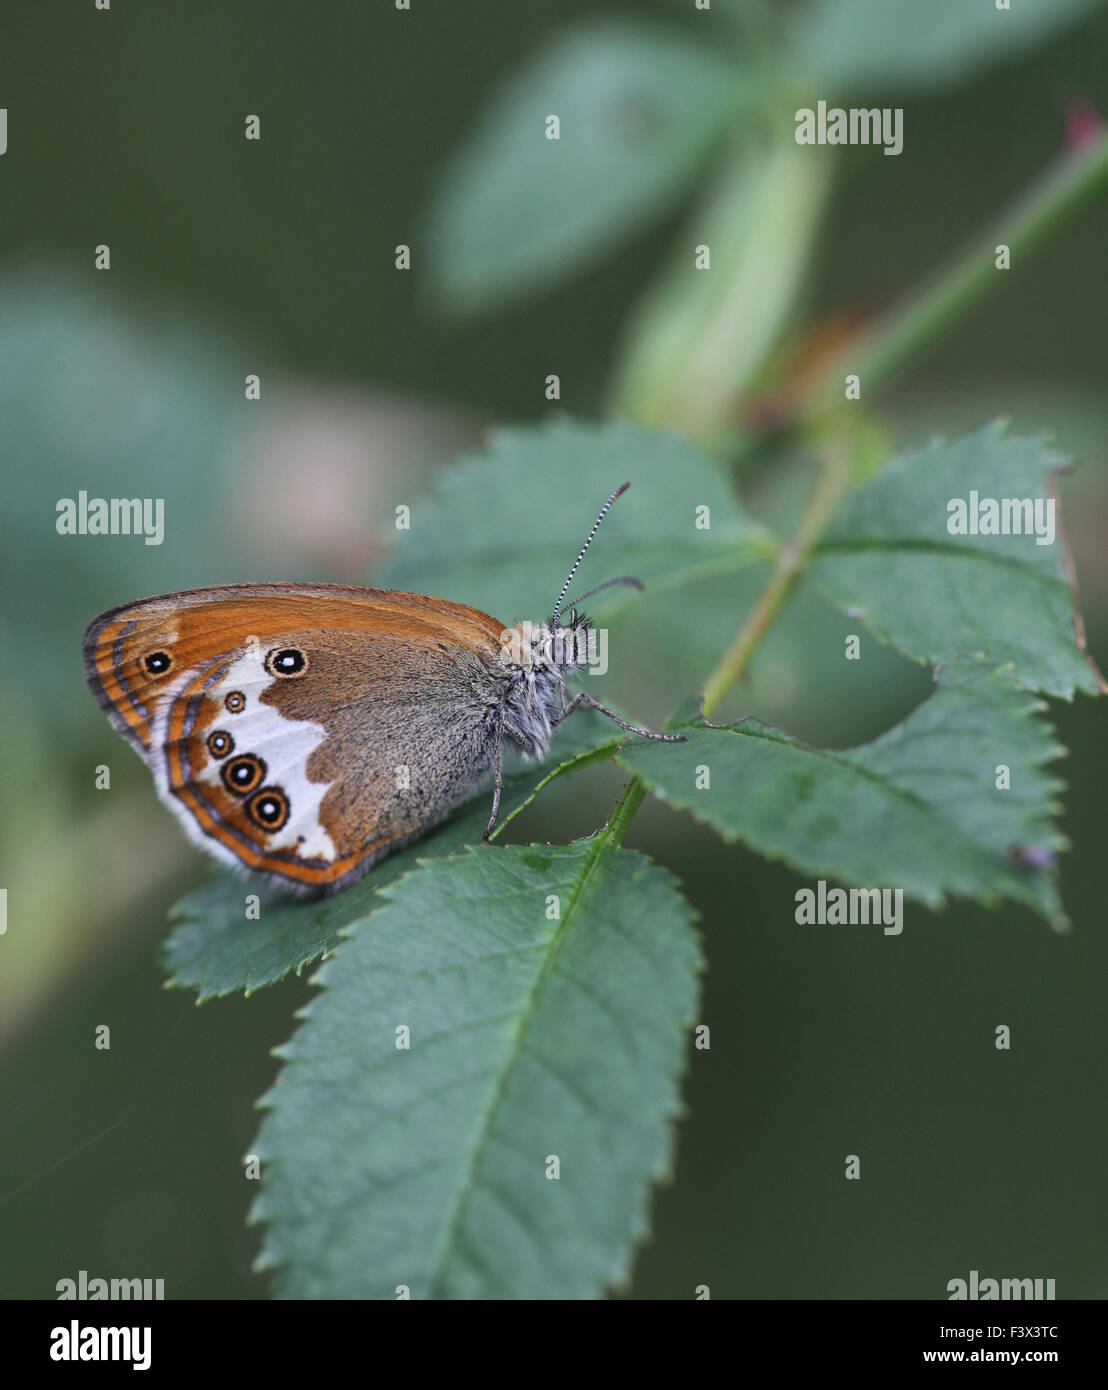 Pearly Heide in Ruhe am Dornbusch Blatt Ungarn Juni 2015 Stockfoto